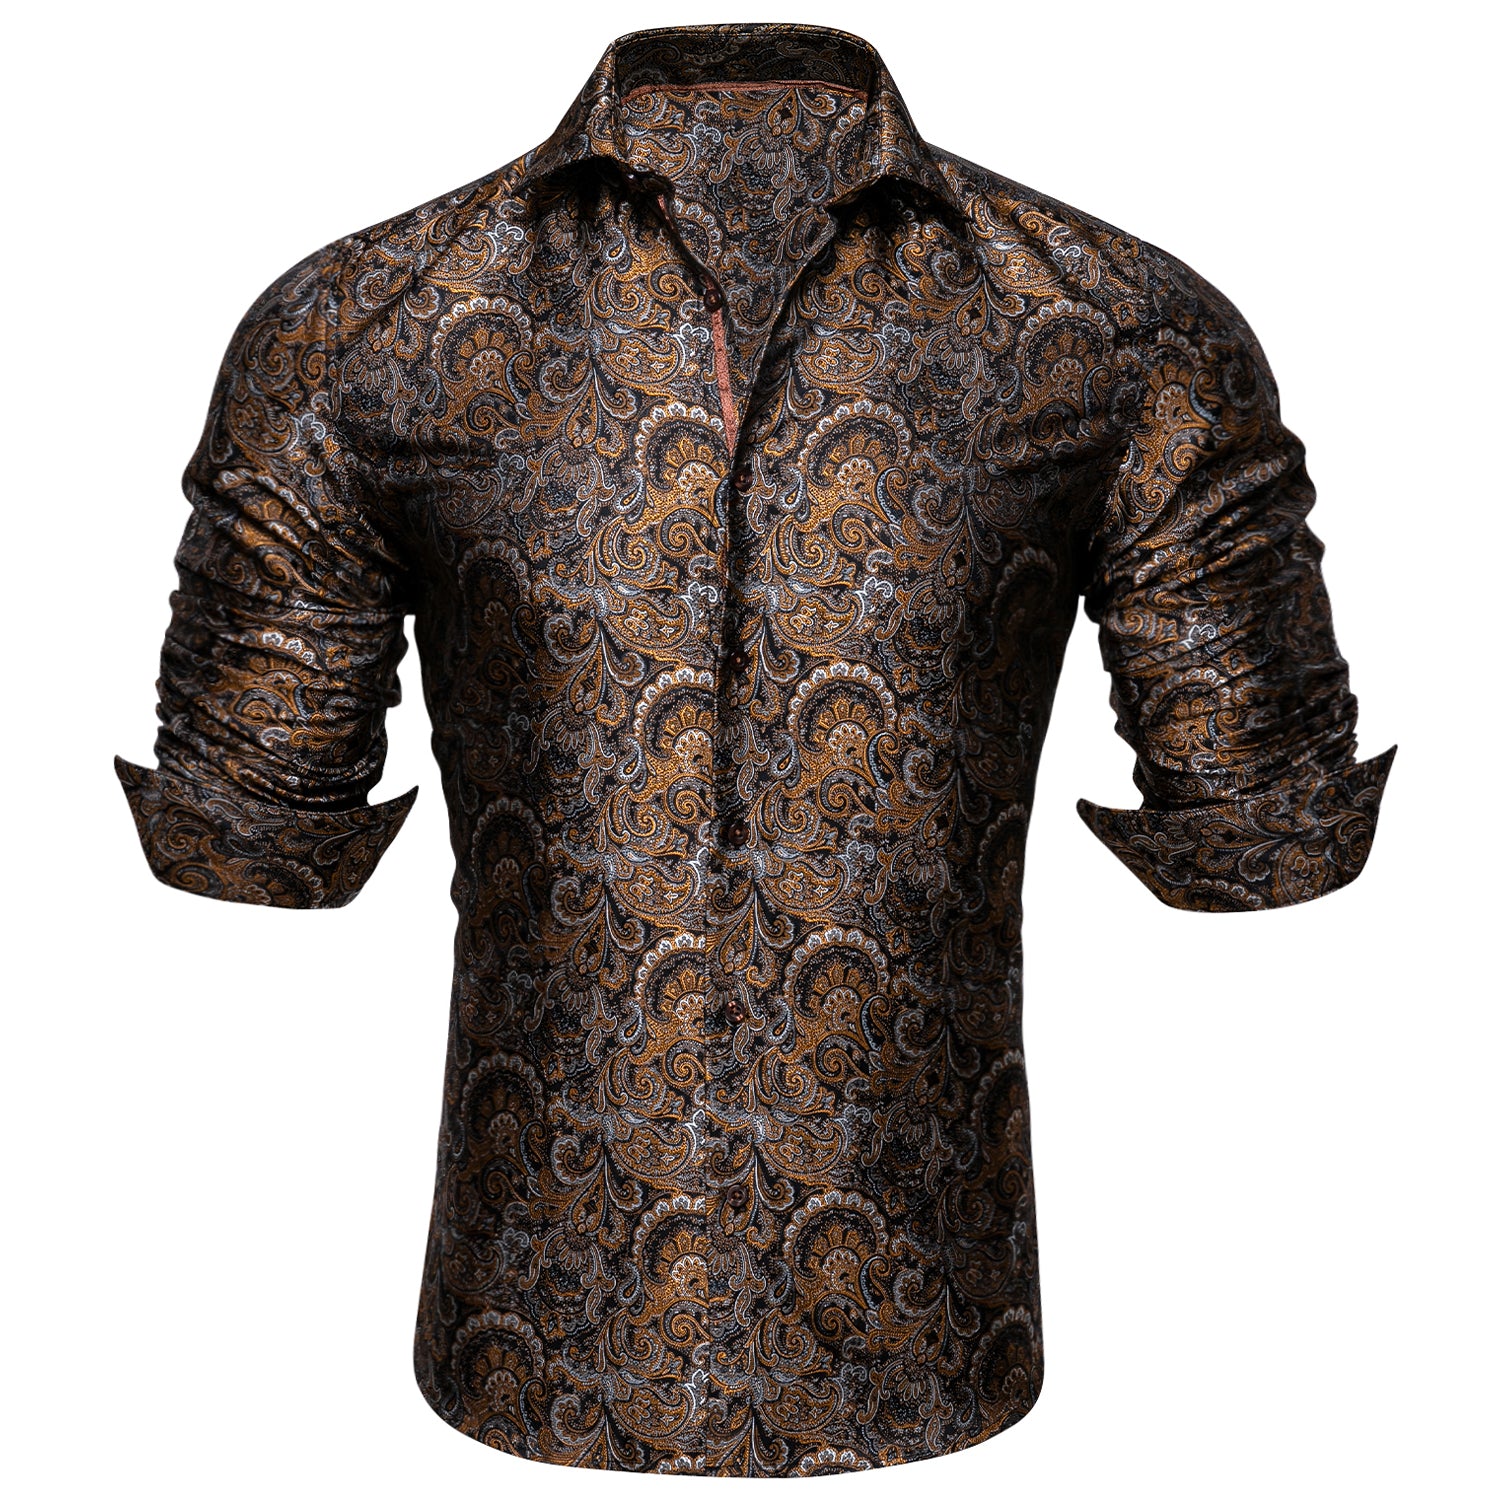 Barry.wang Fashionable Black Golden Silk Paisley Tribal Long Sleeve Daily Tops Men's Shirt